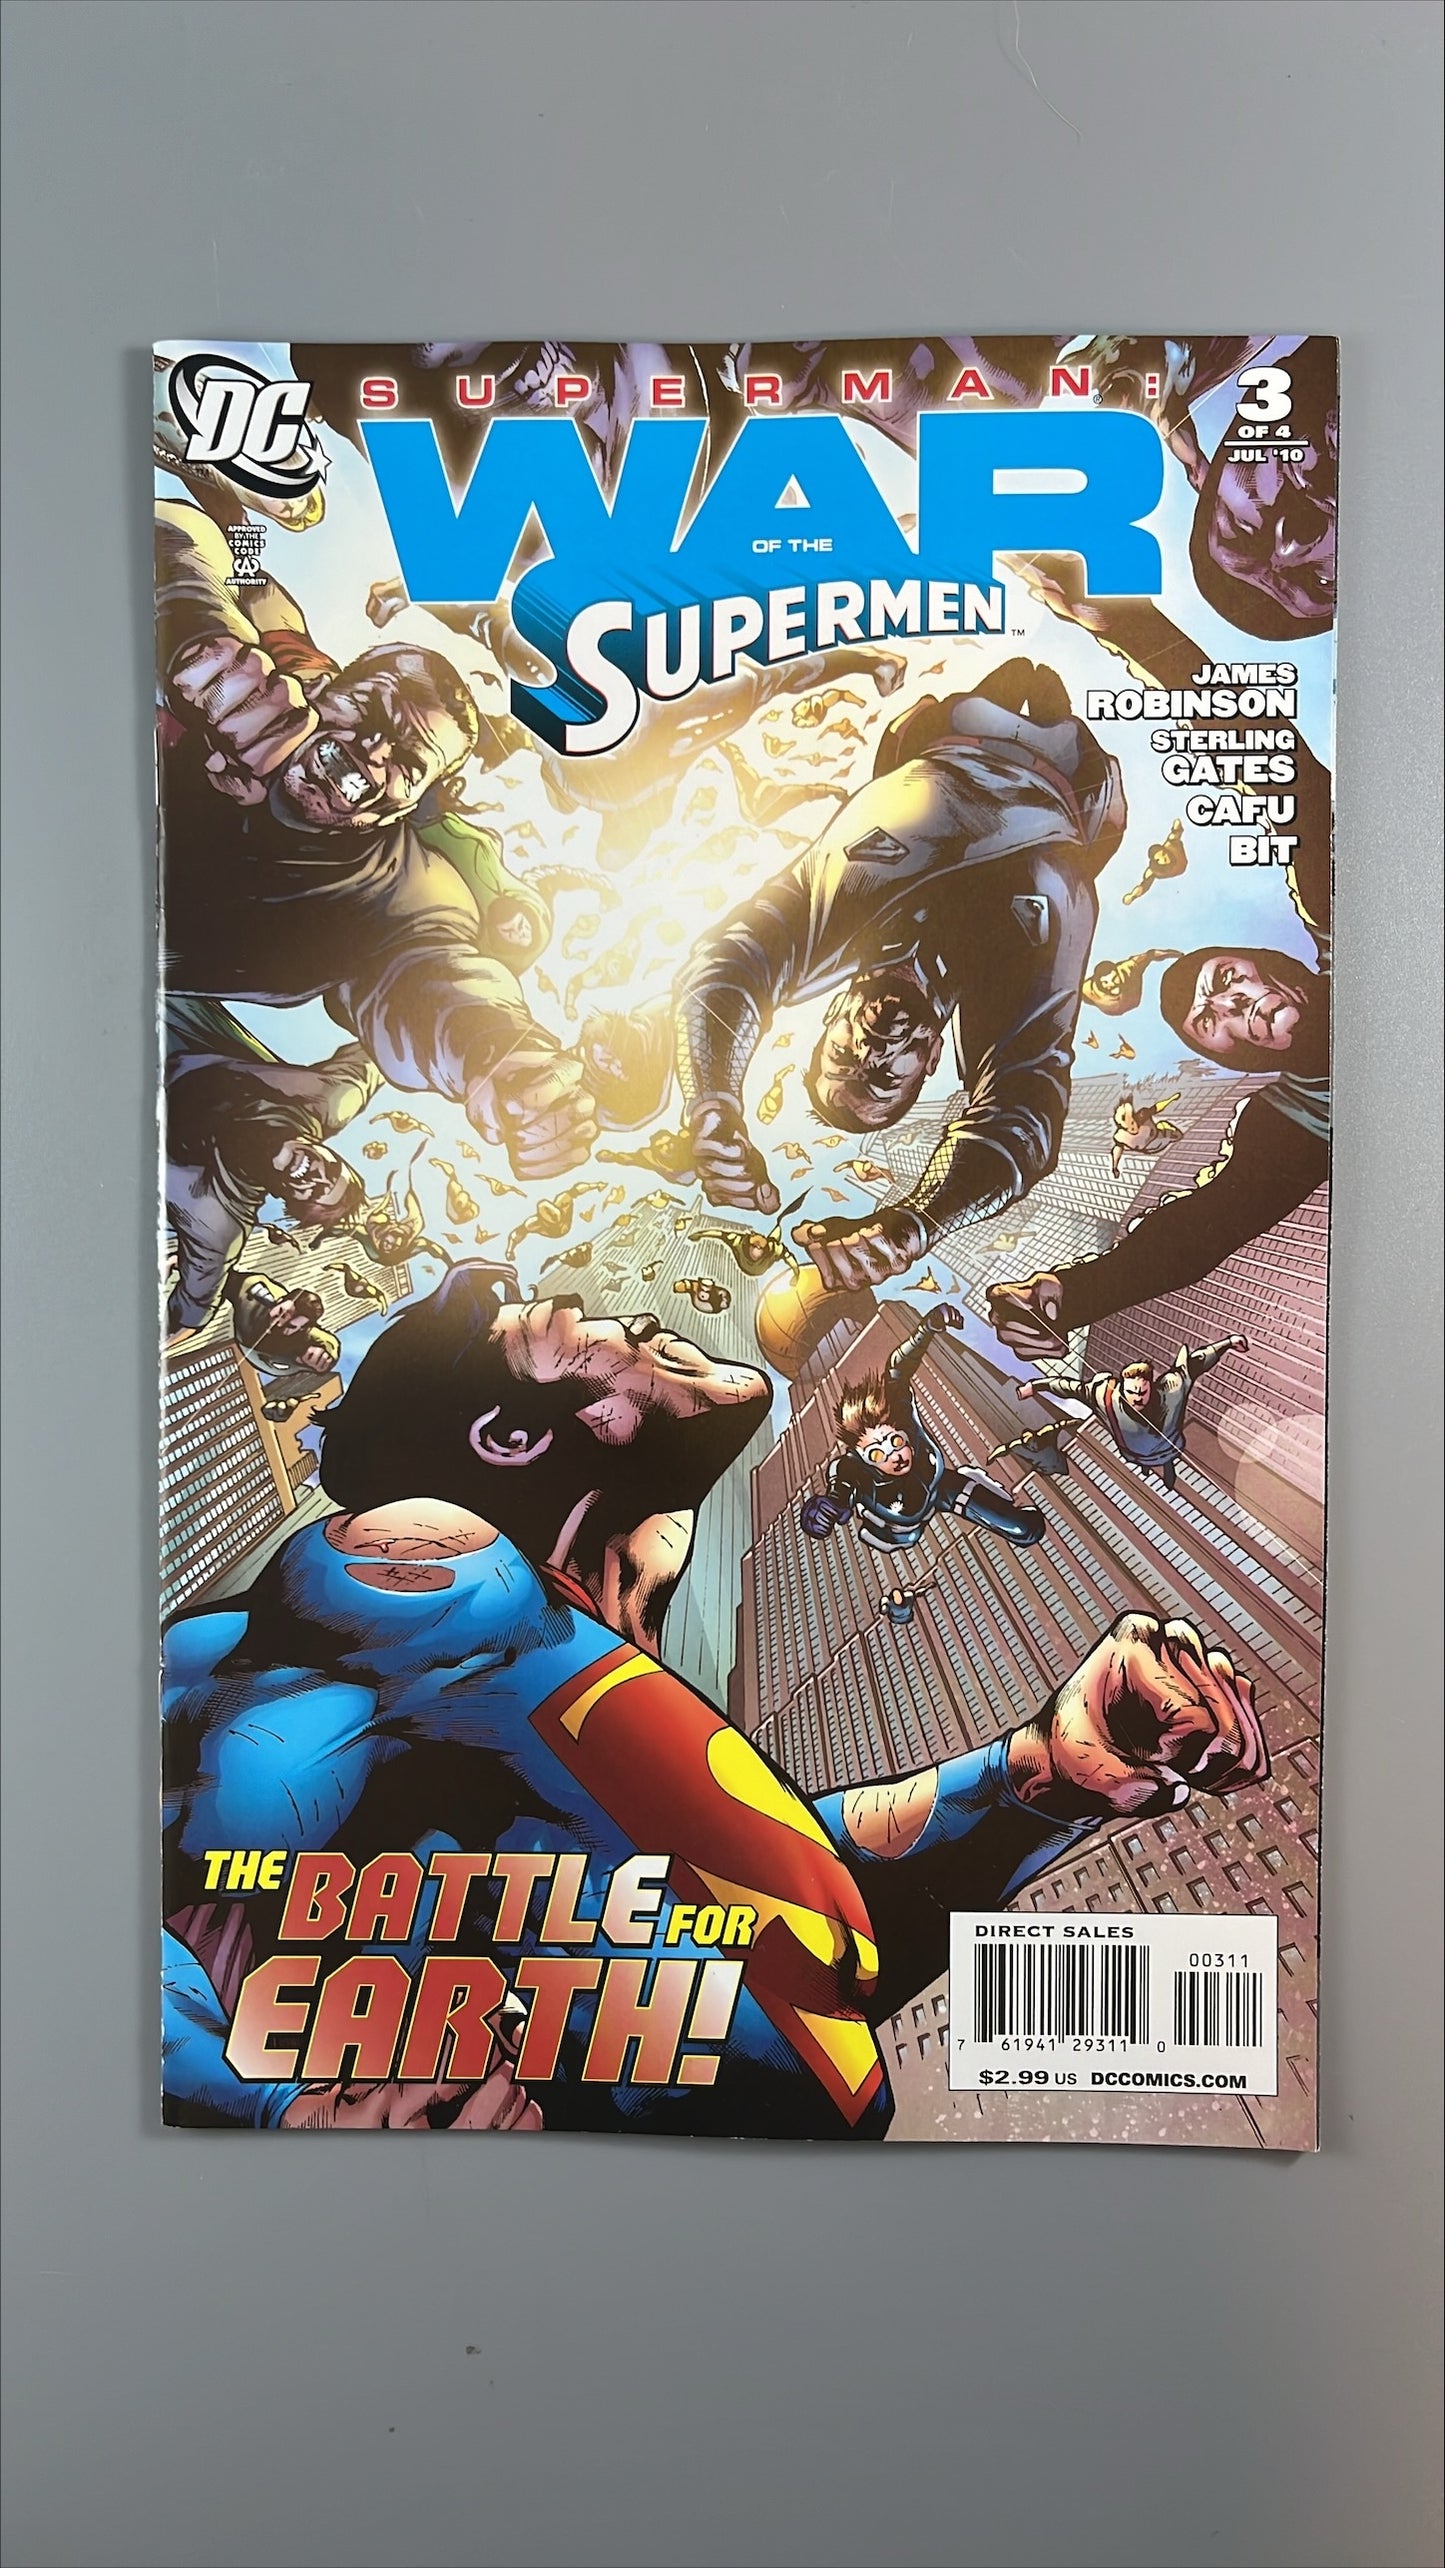 Superman: War of the Supermen #3 (of 4)